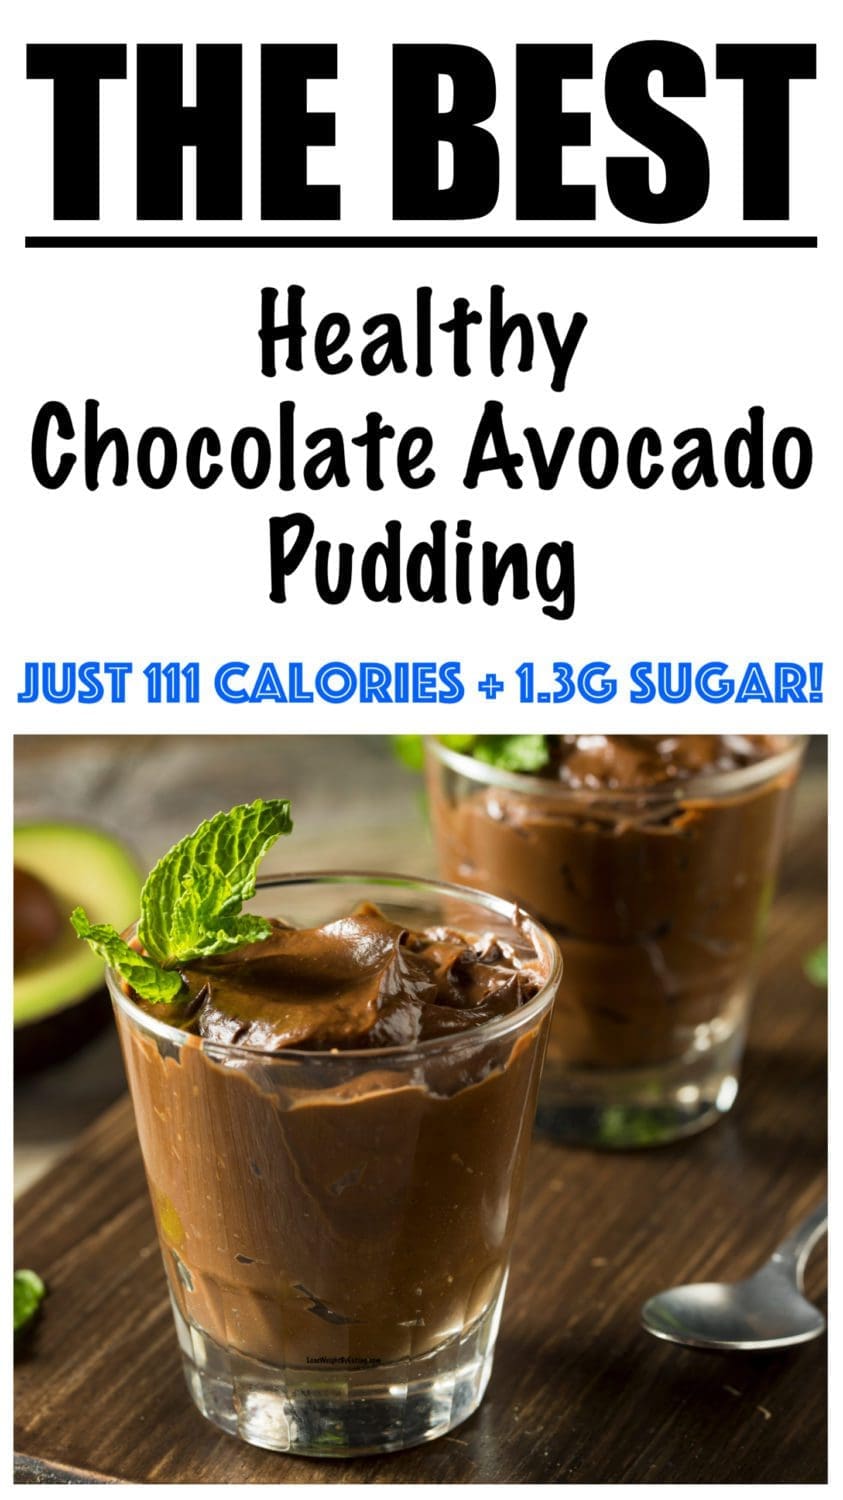 Healthy Chocolate Avocado Pudding